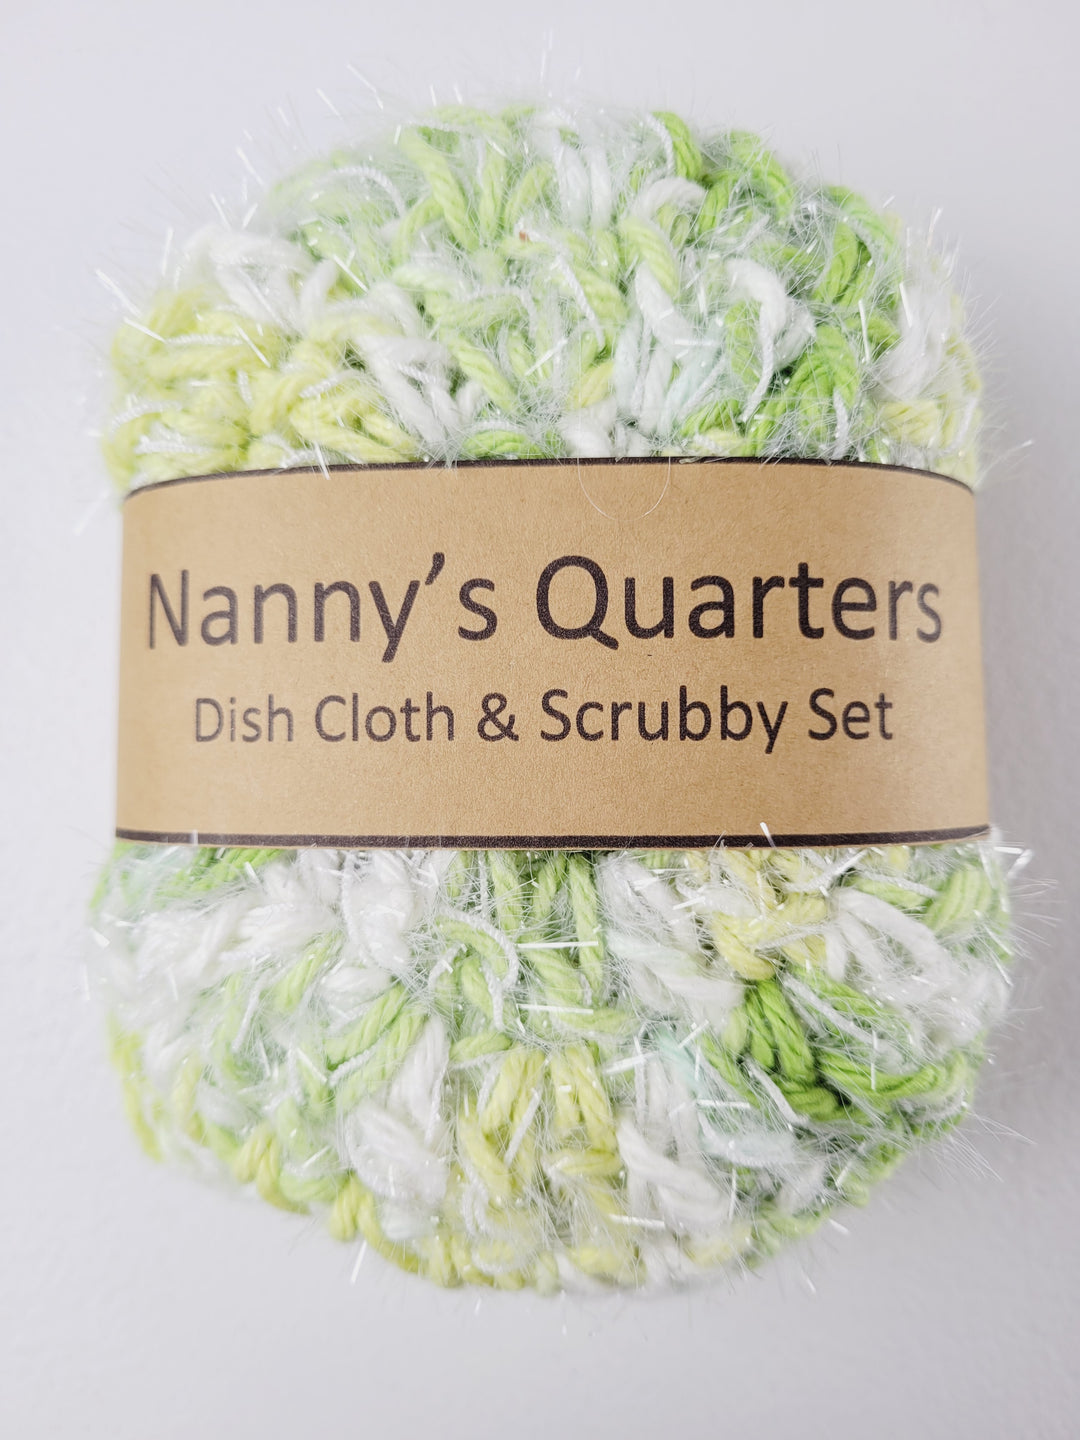 Nanny's Quarters, Dish Cloth & Scrubby Sets